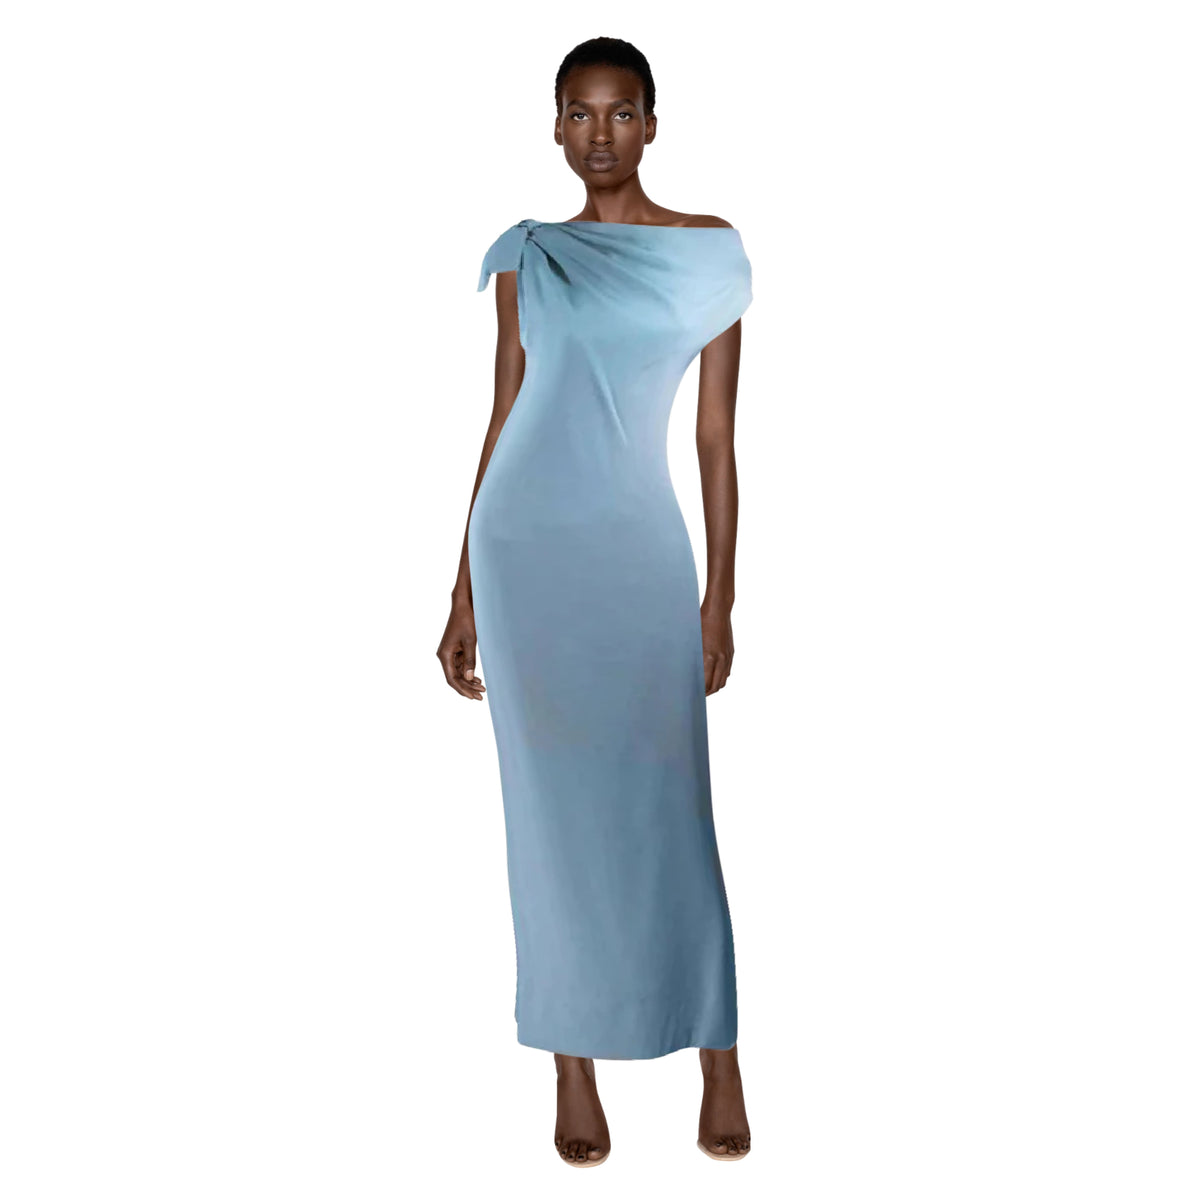 CHRISTIAN DIOR HAUTRE COUTURE Aqua Draped Gown| Size 0/2